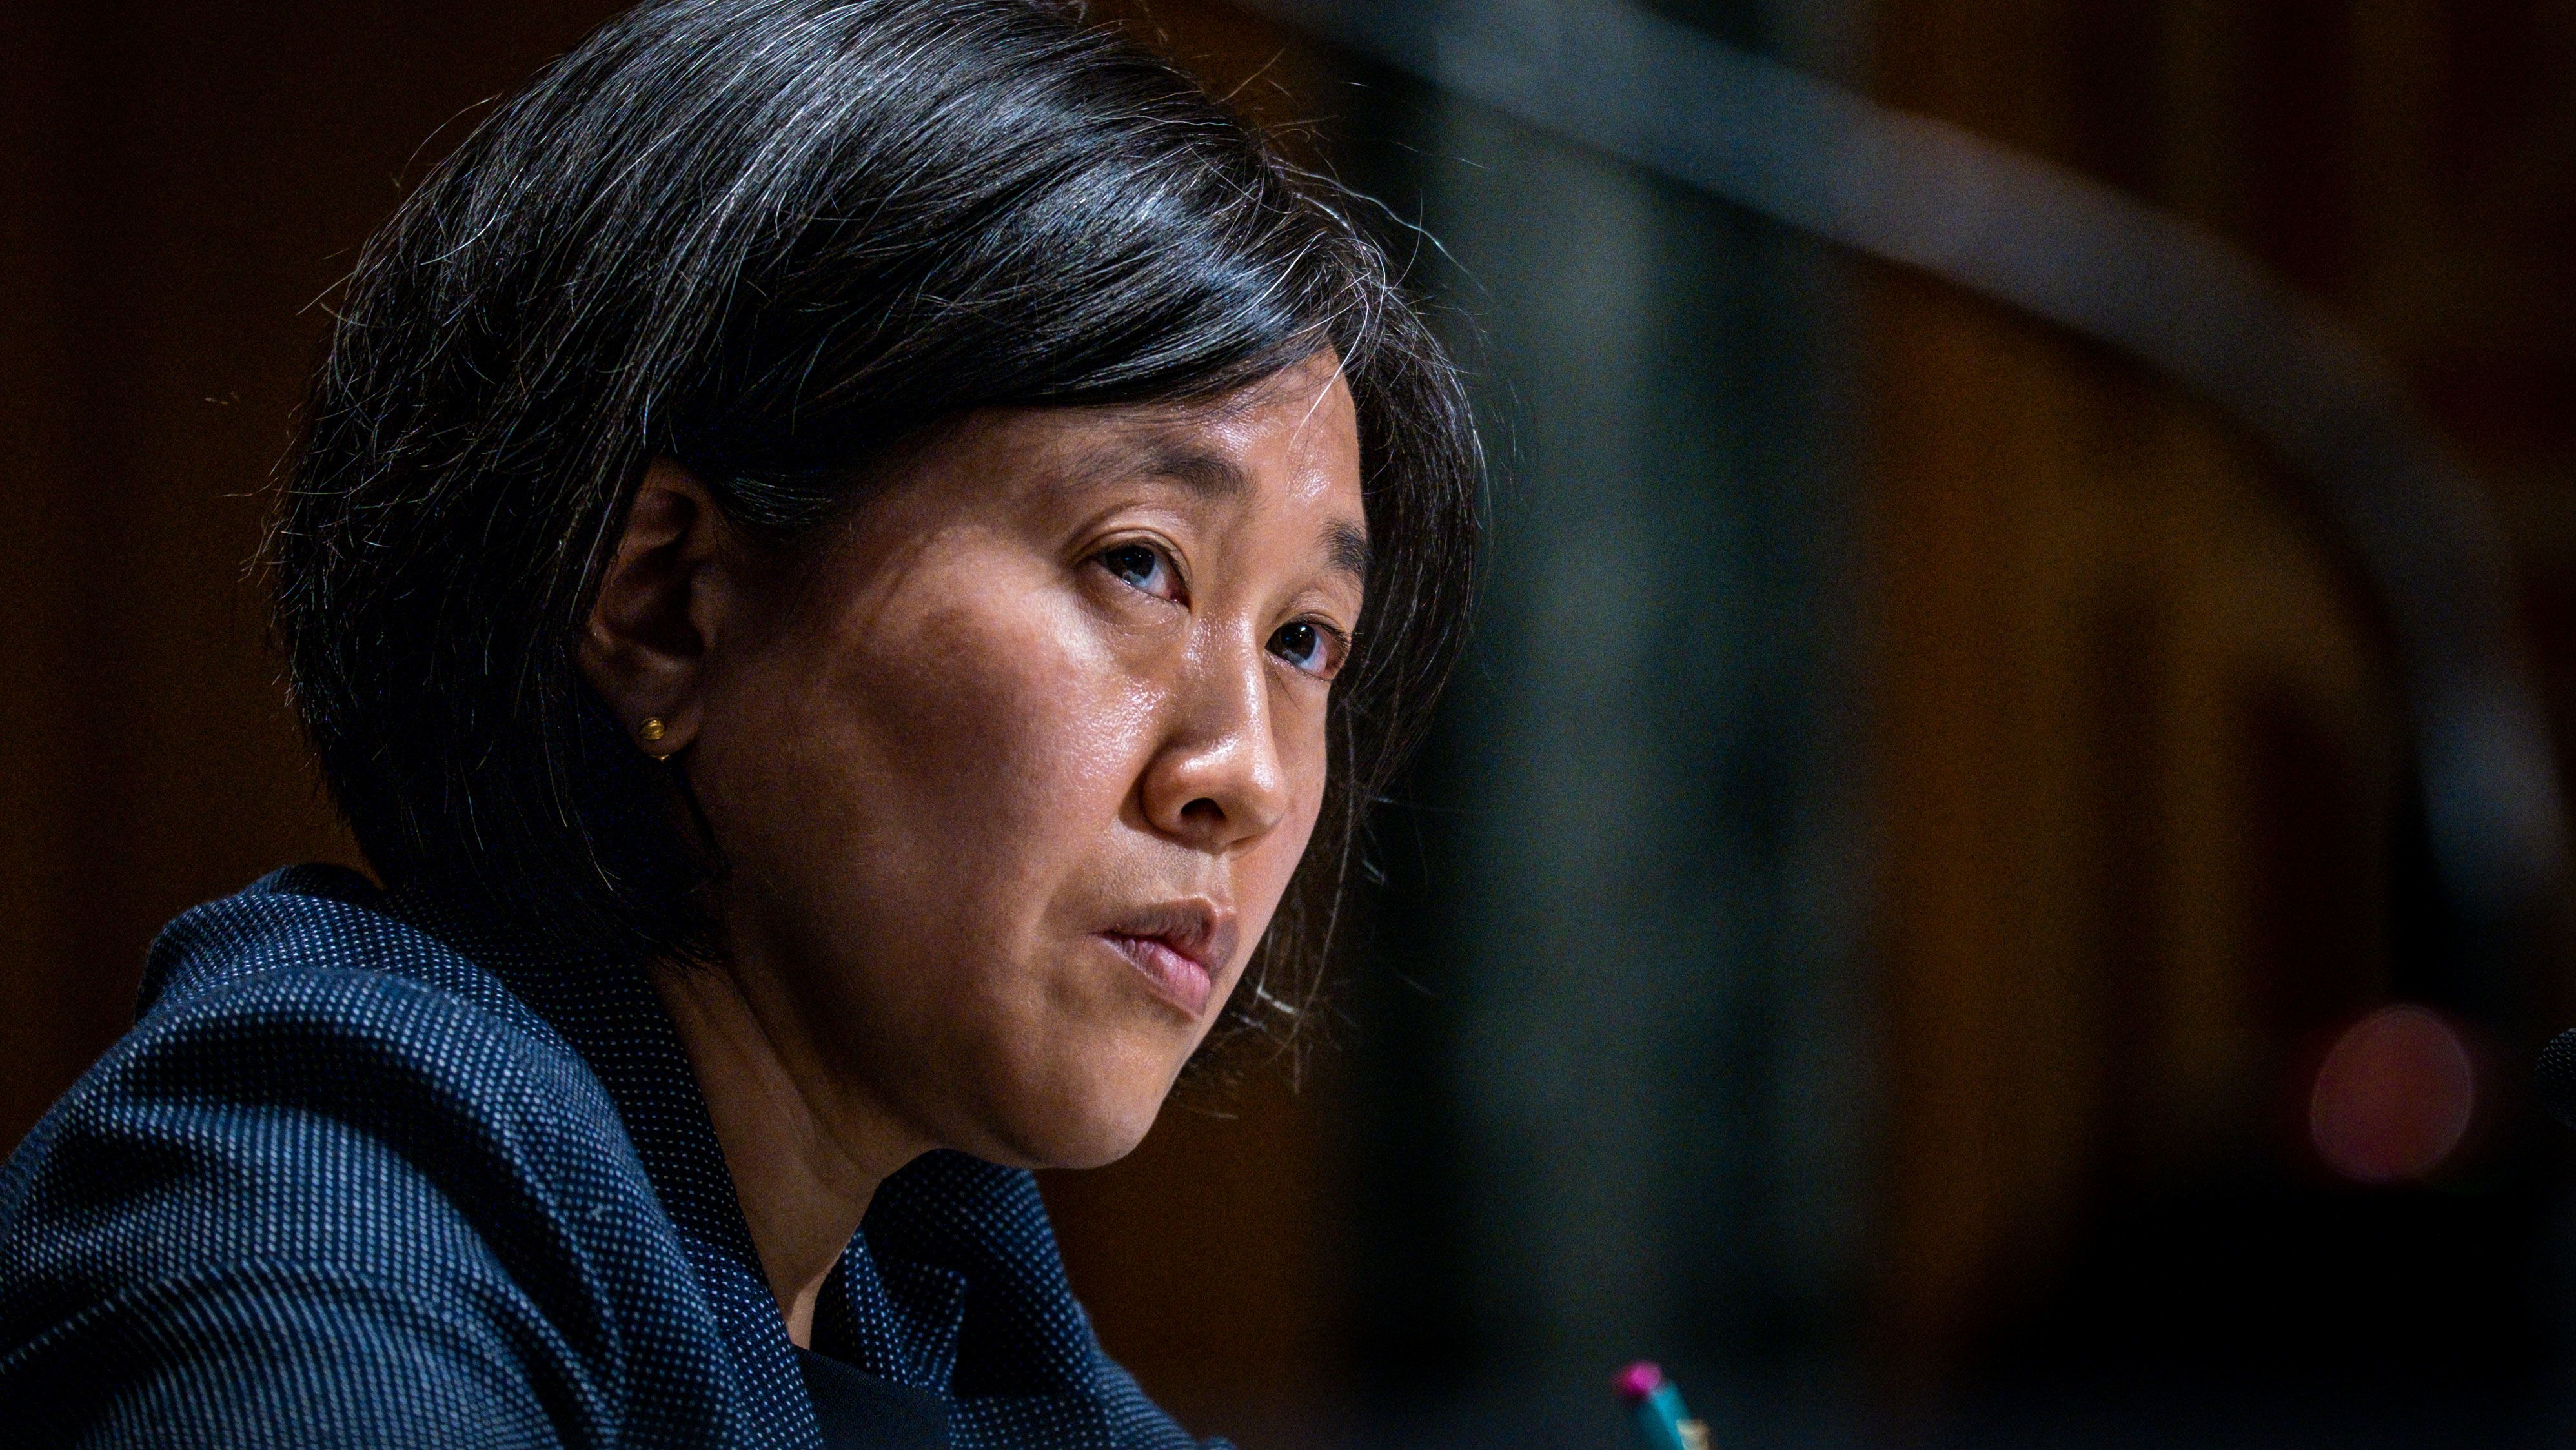 Katherine C. Tai, United States Trade Representative, testifies during a Senate Finance Committee hearing on May 12, 2021 in Washington, DC.